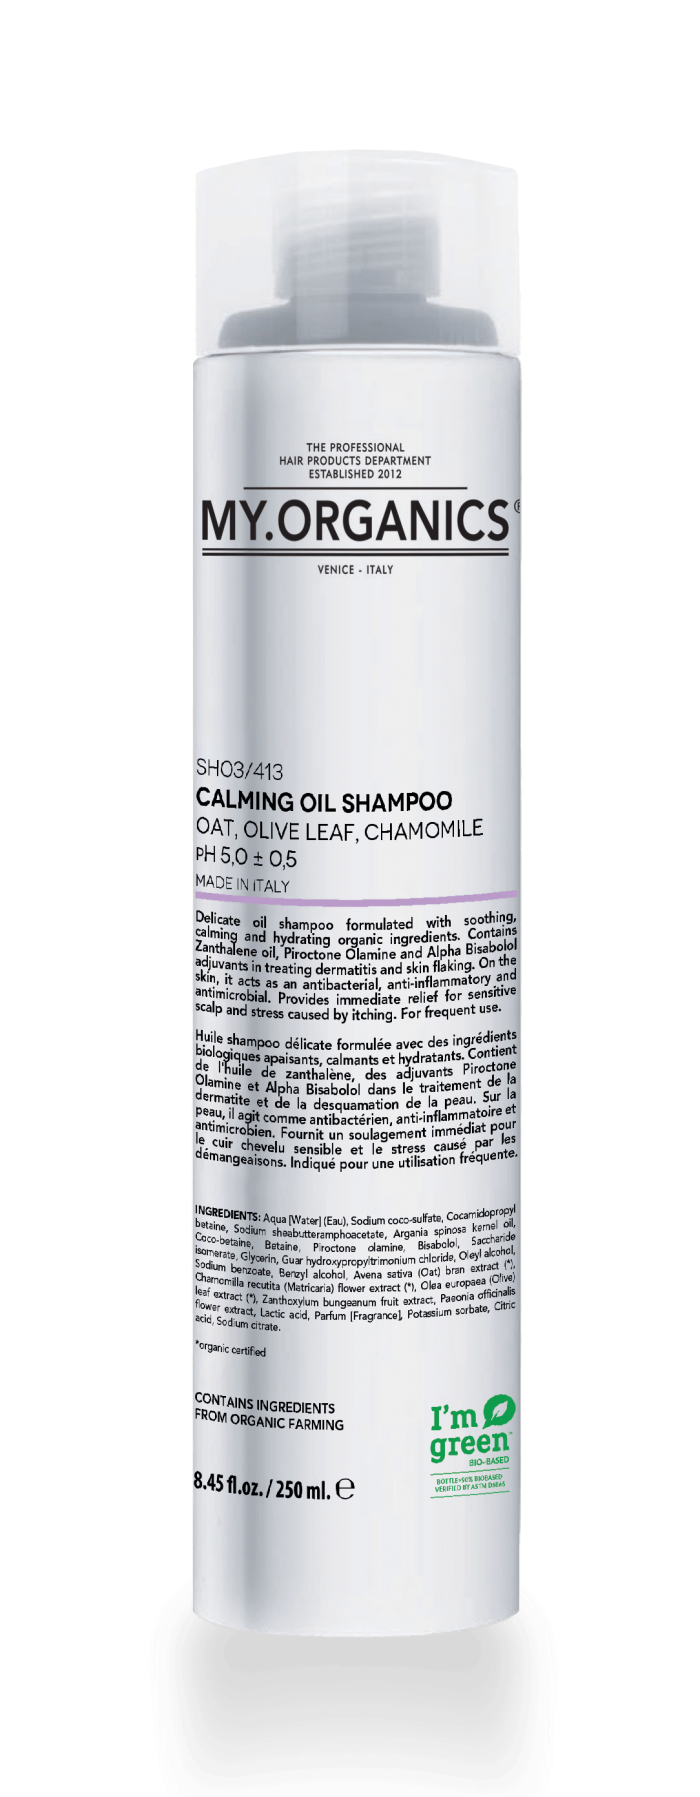 The Organic CALMING OIL Shampoo